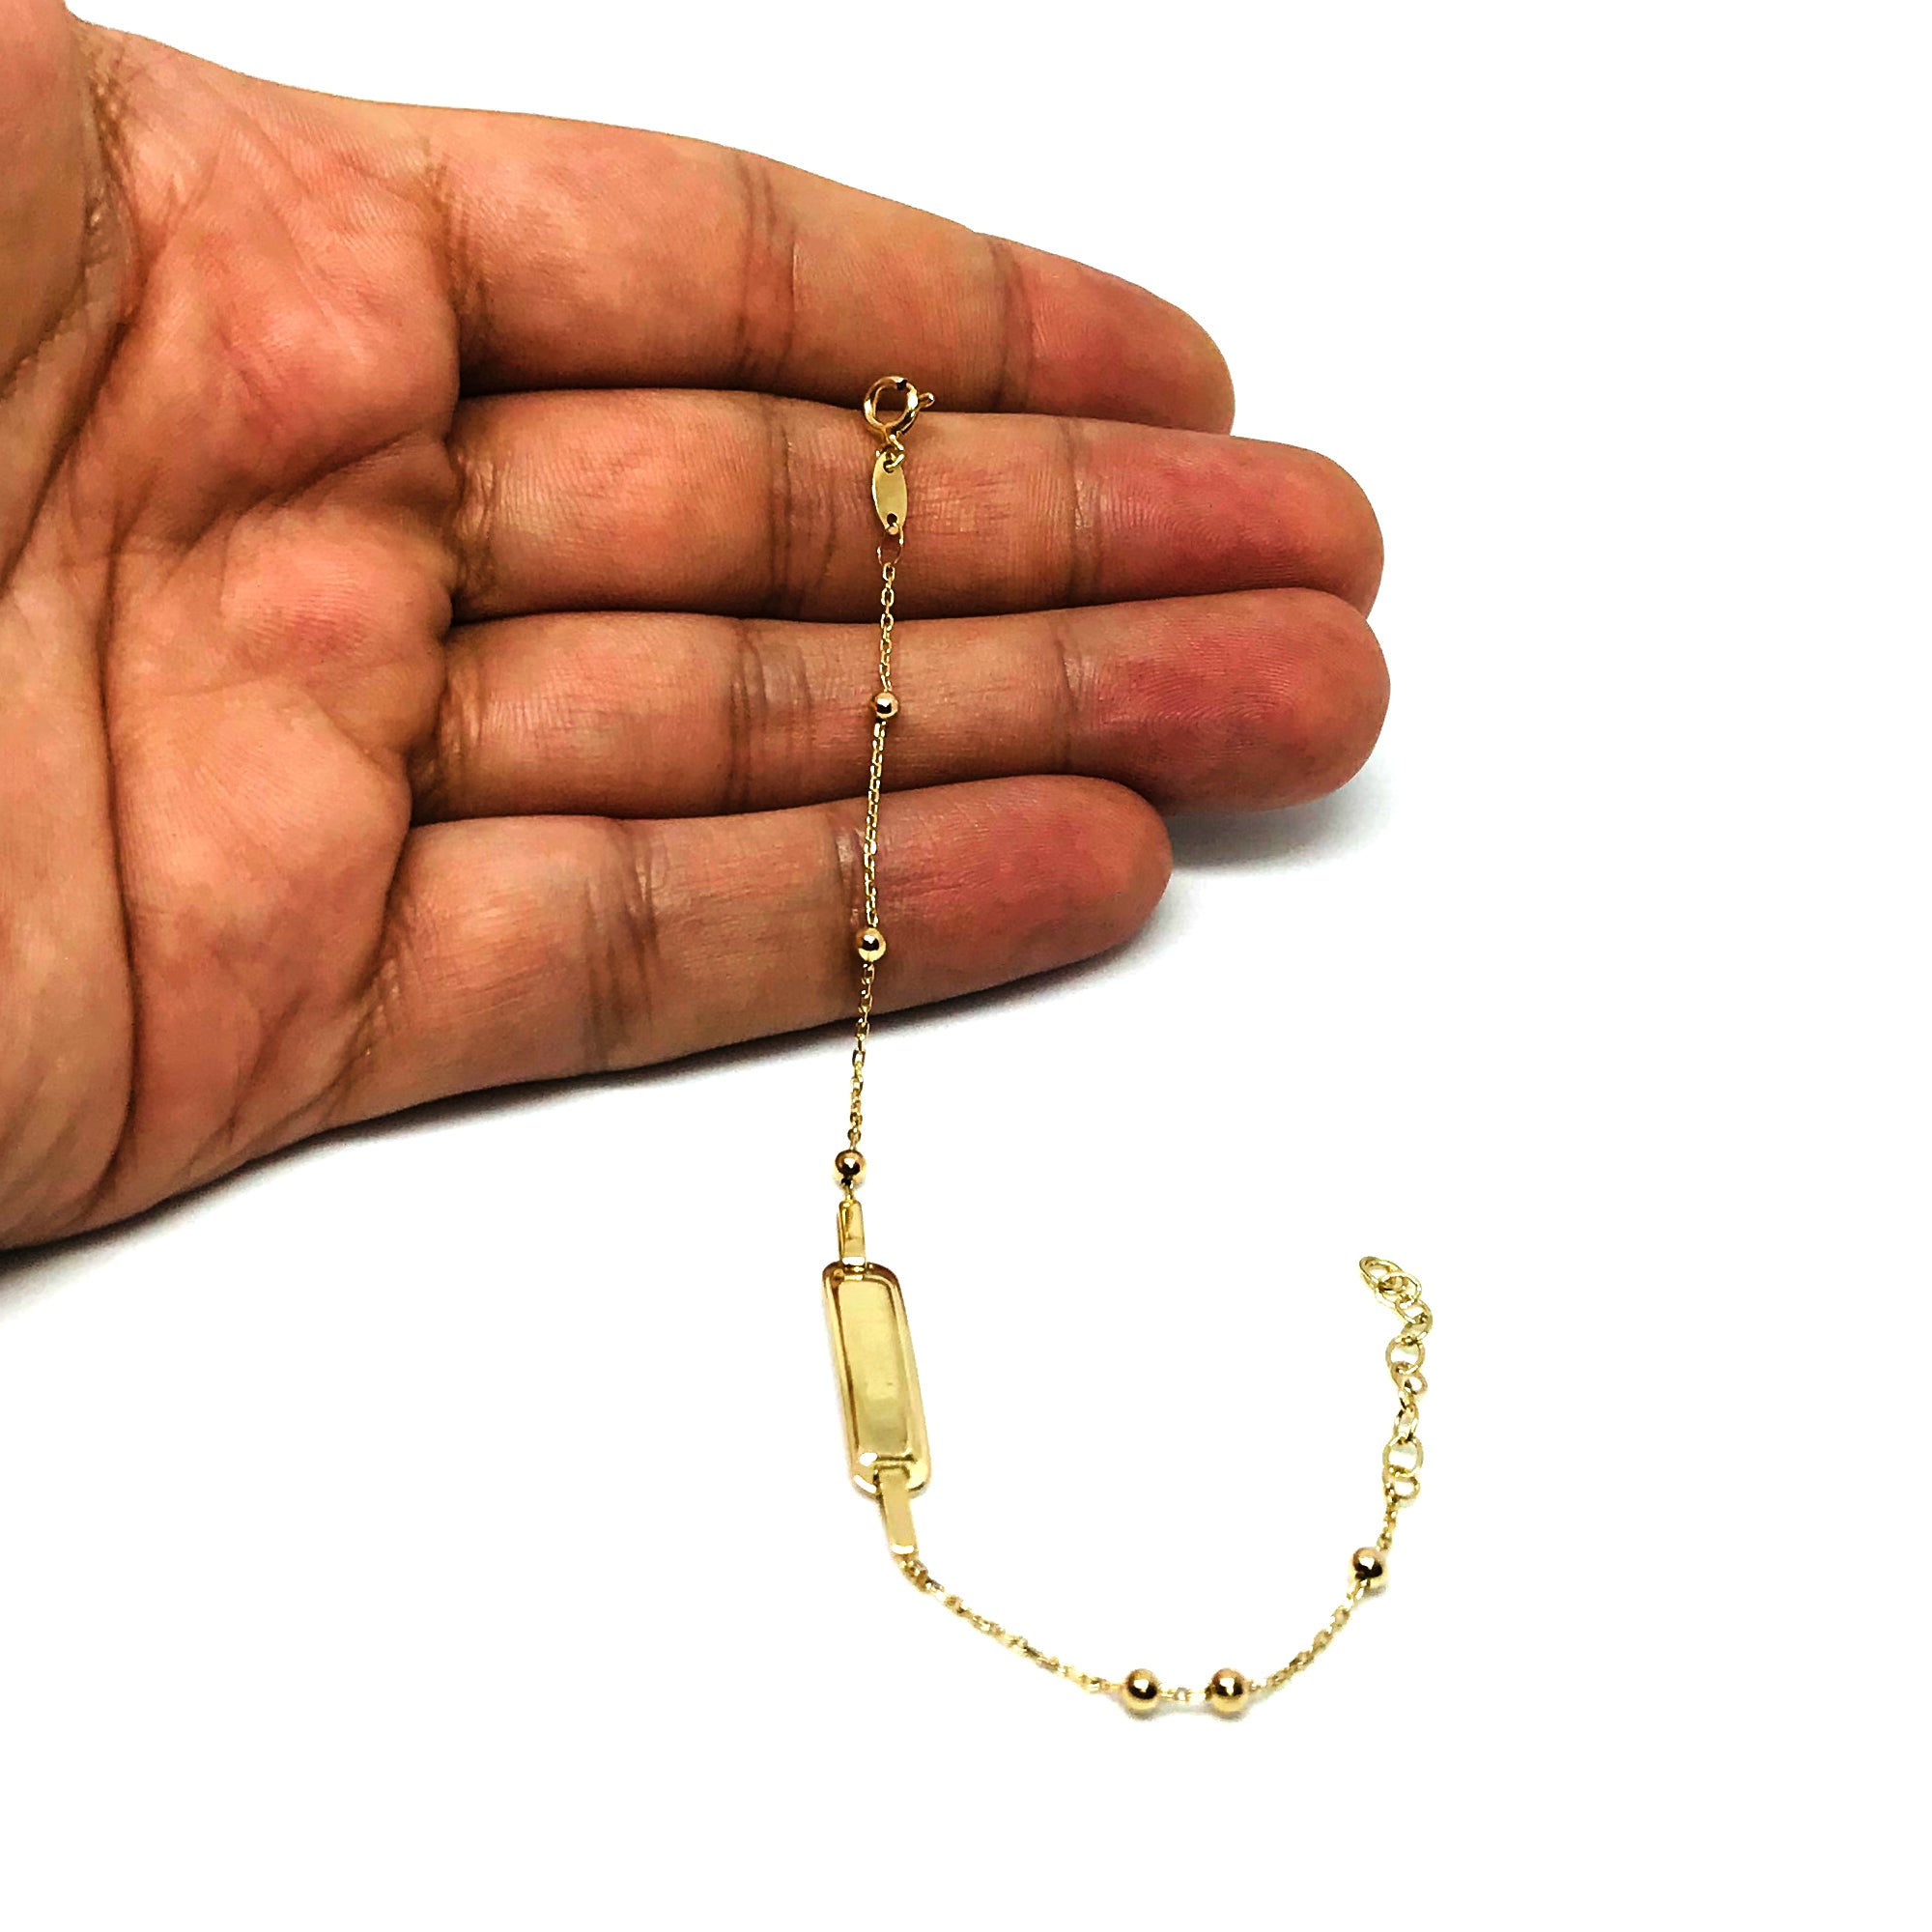 14k Yellow Gold ID Adjustable Baby Bracelet, 6.5" fine designer jewelry for men and women